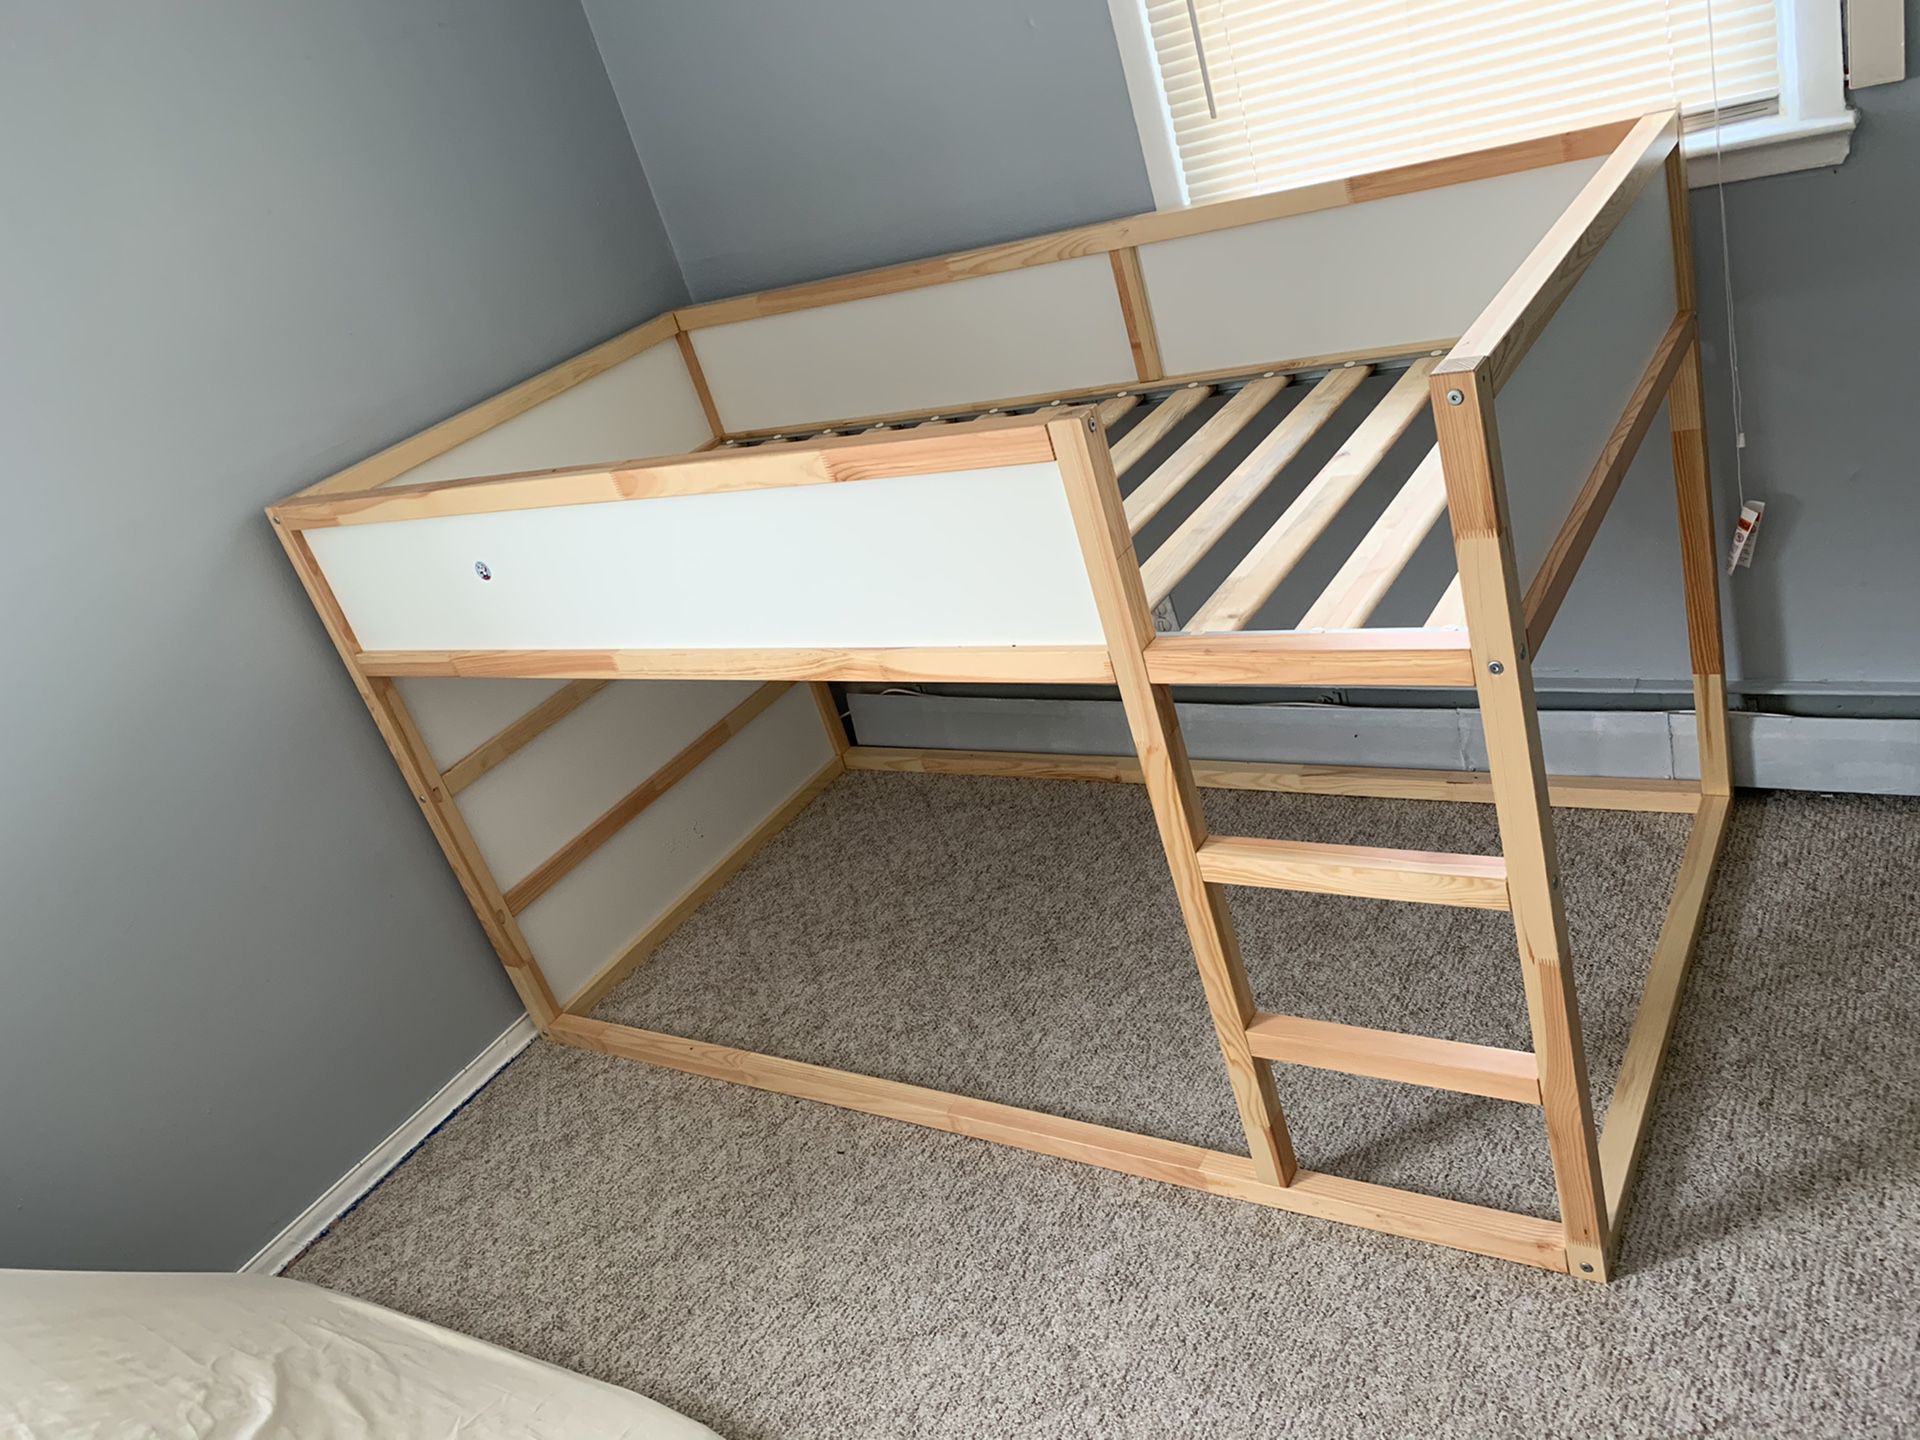 IKEA Kura bunk bed with 2 twin mattresses